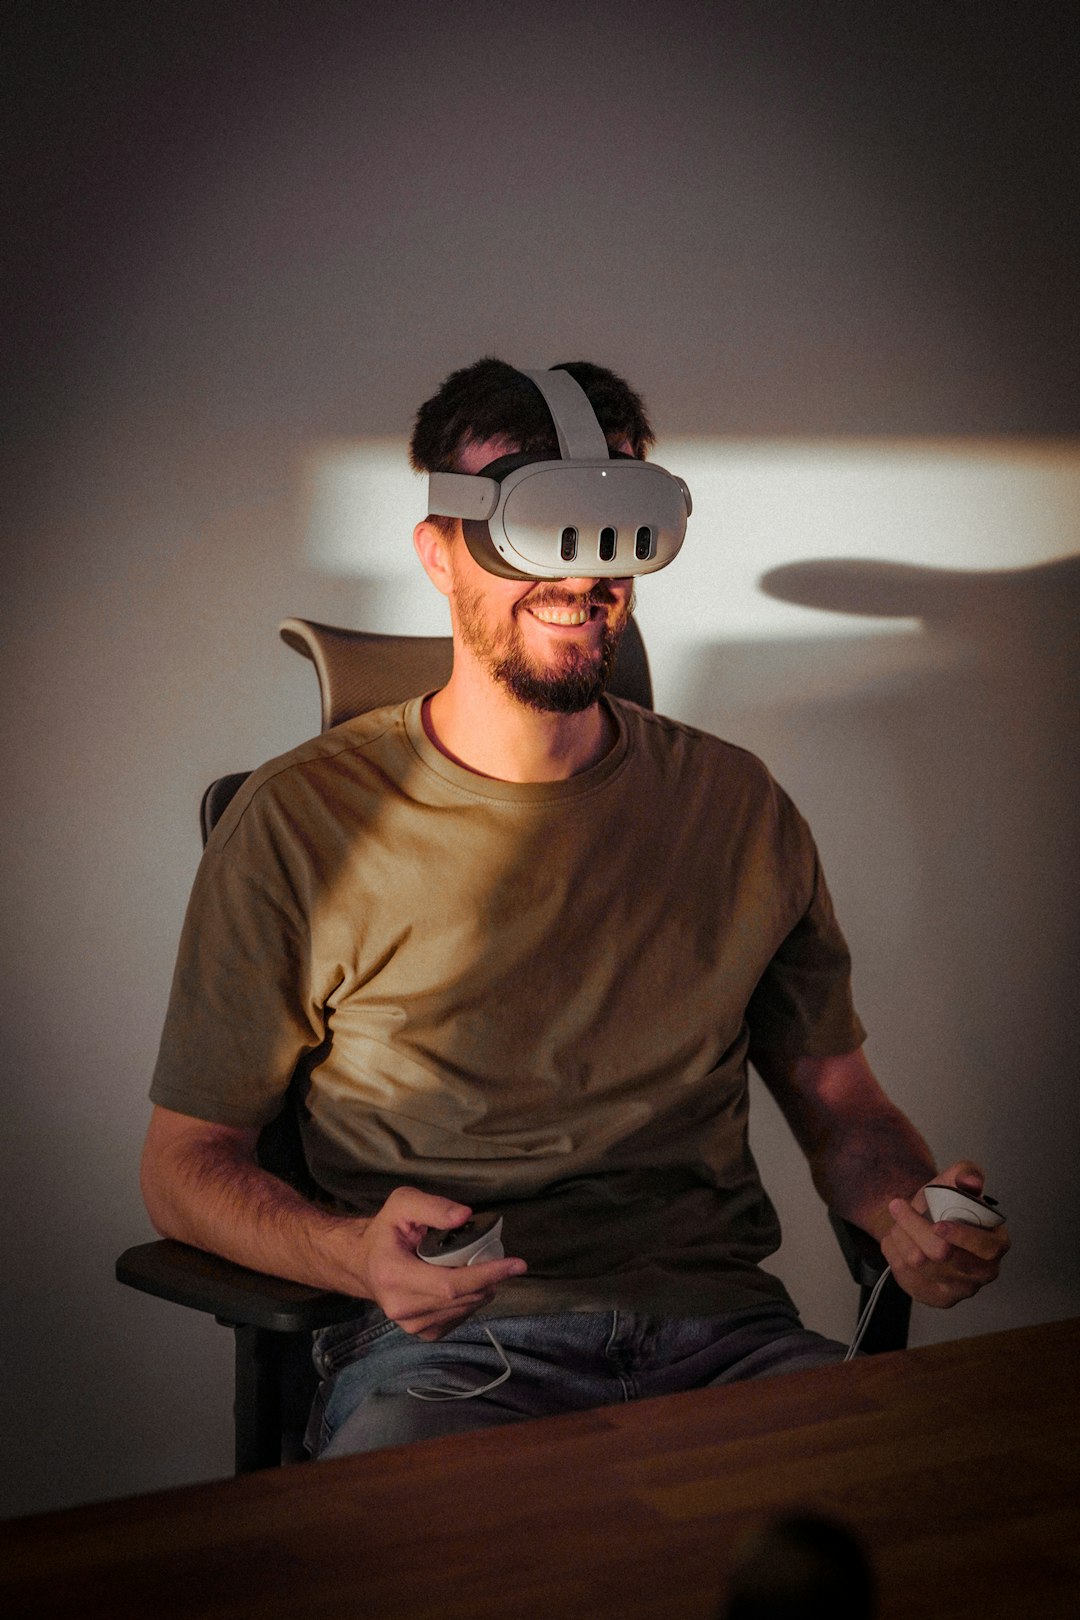 future of virtual reality gaming